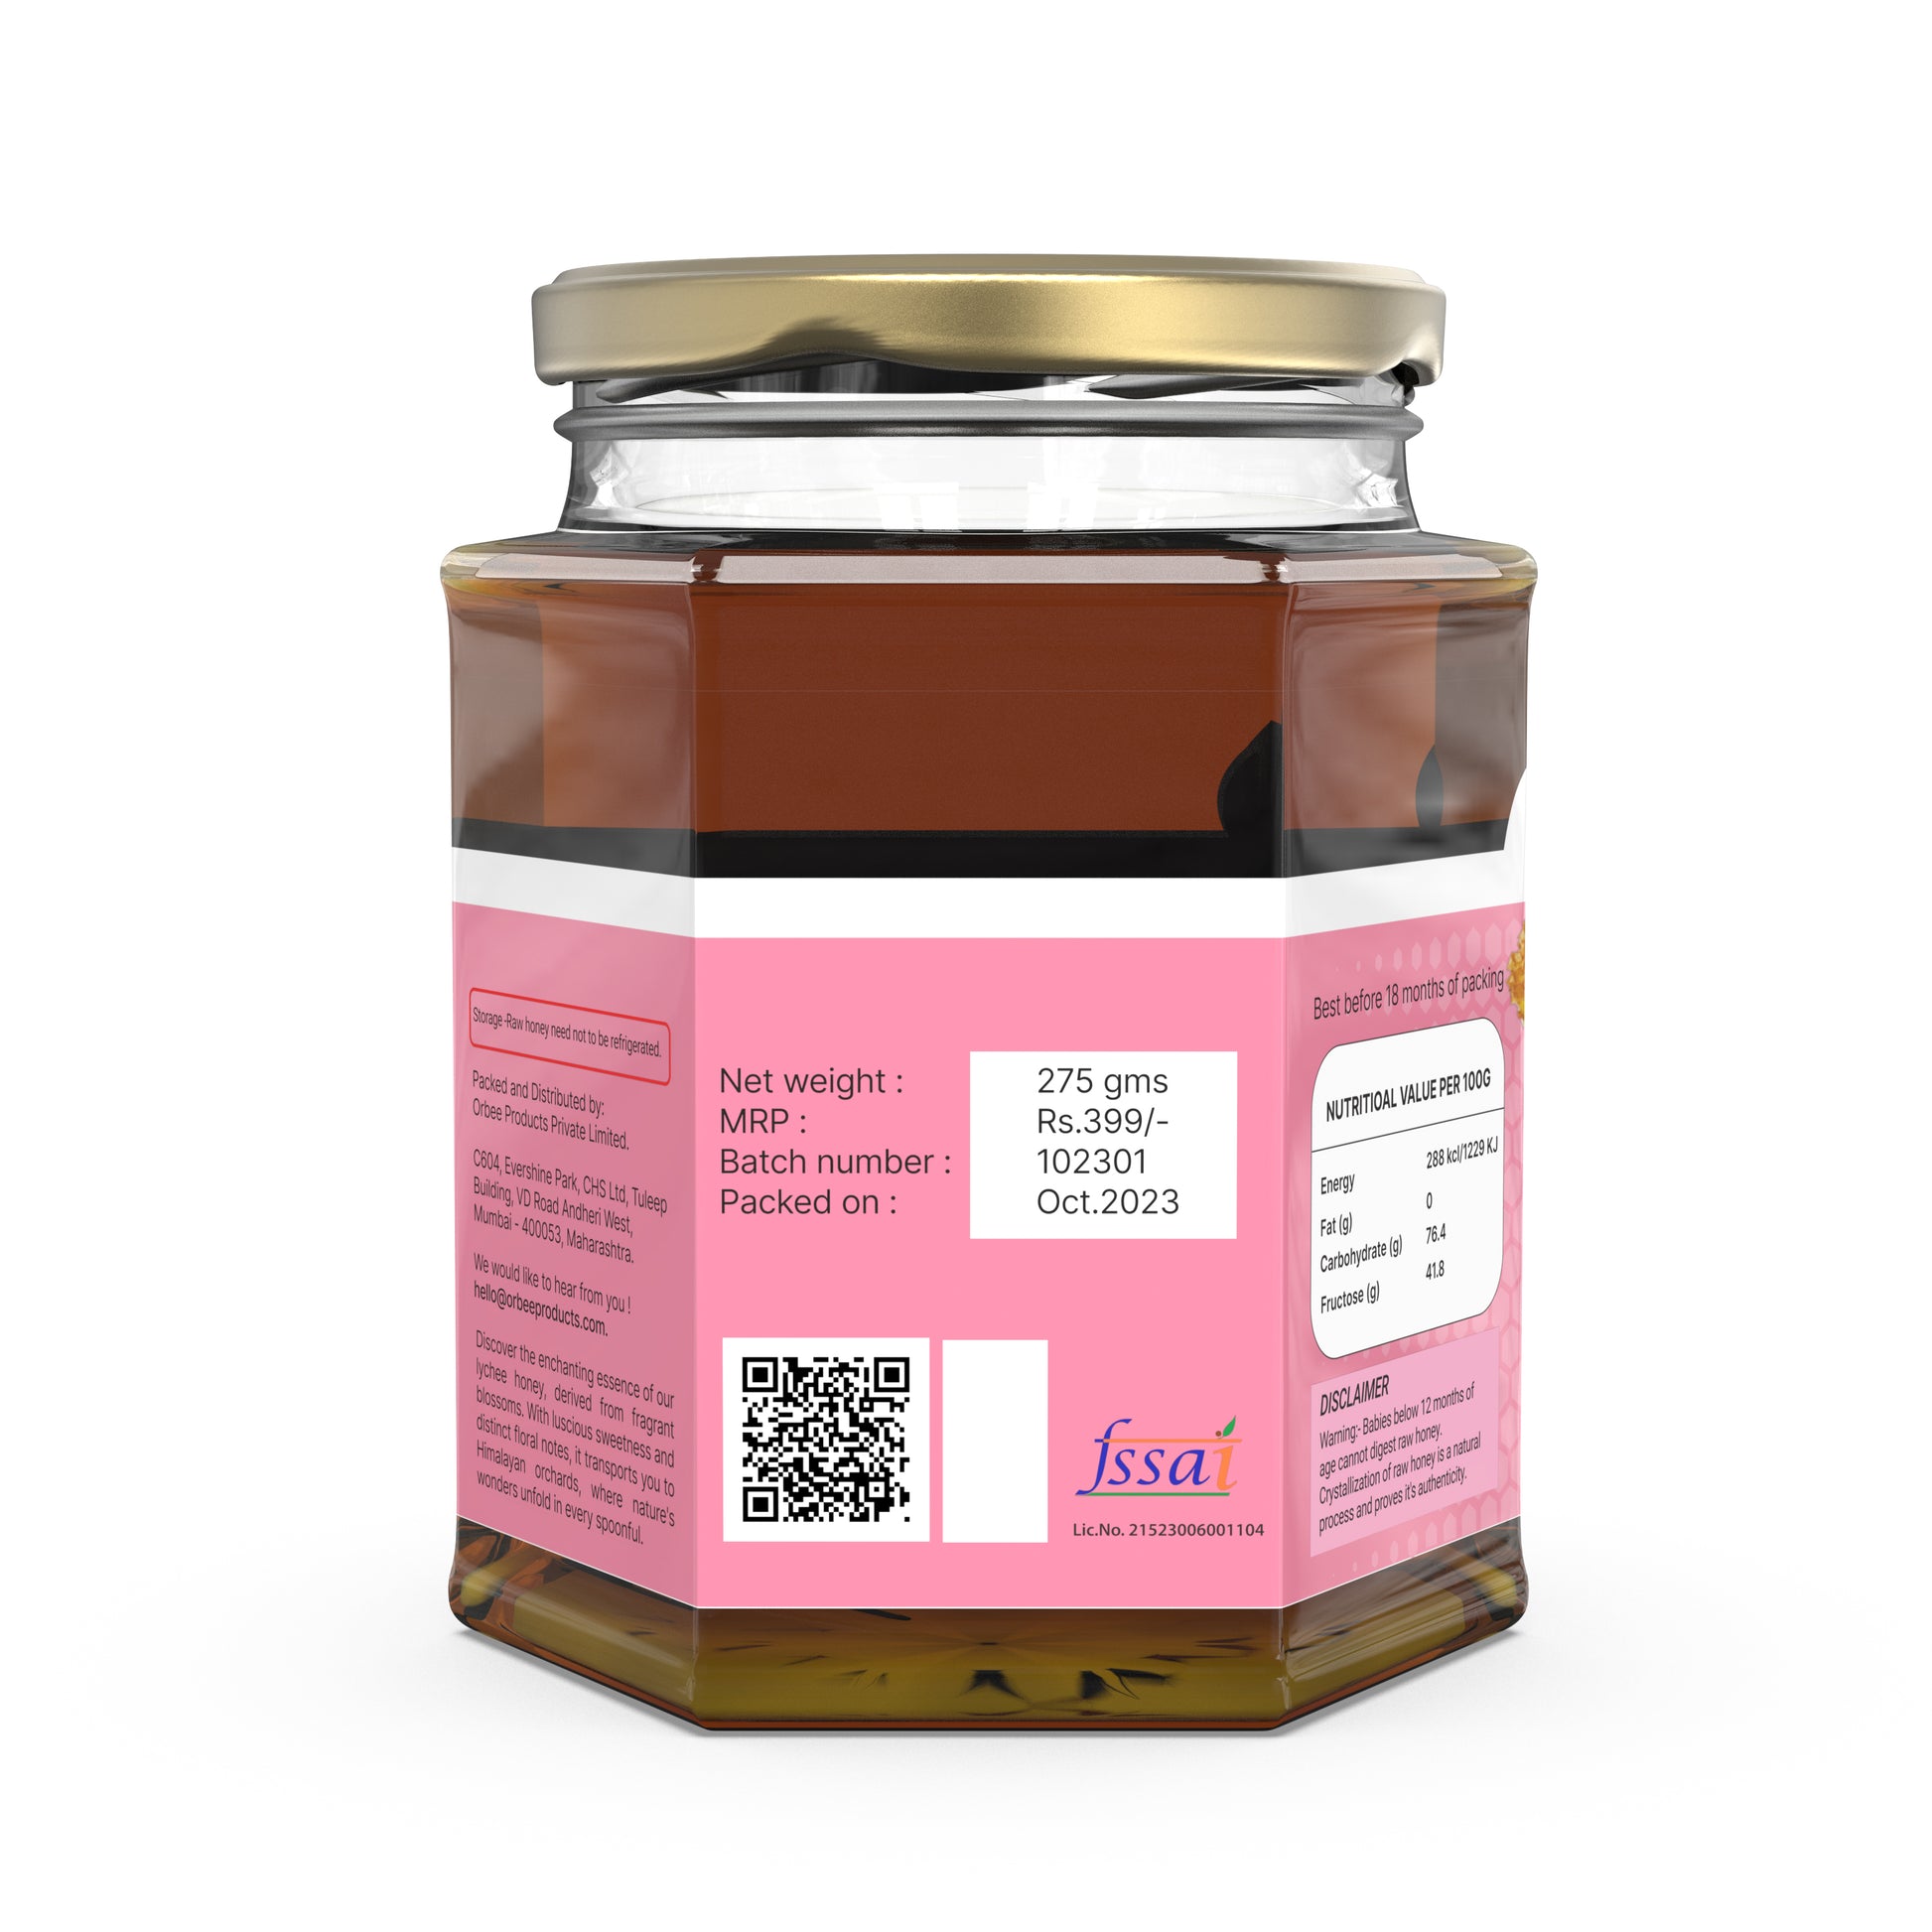 Orbee lychee honey nutritional value